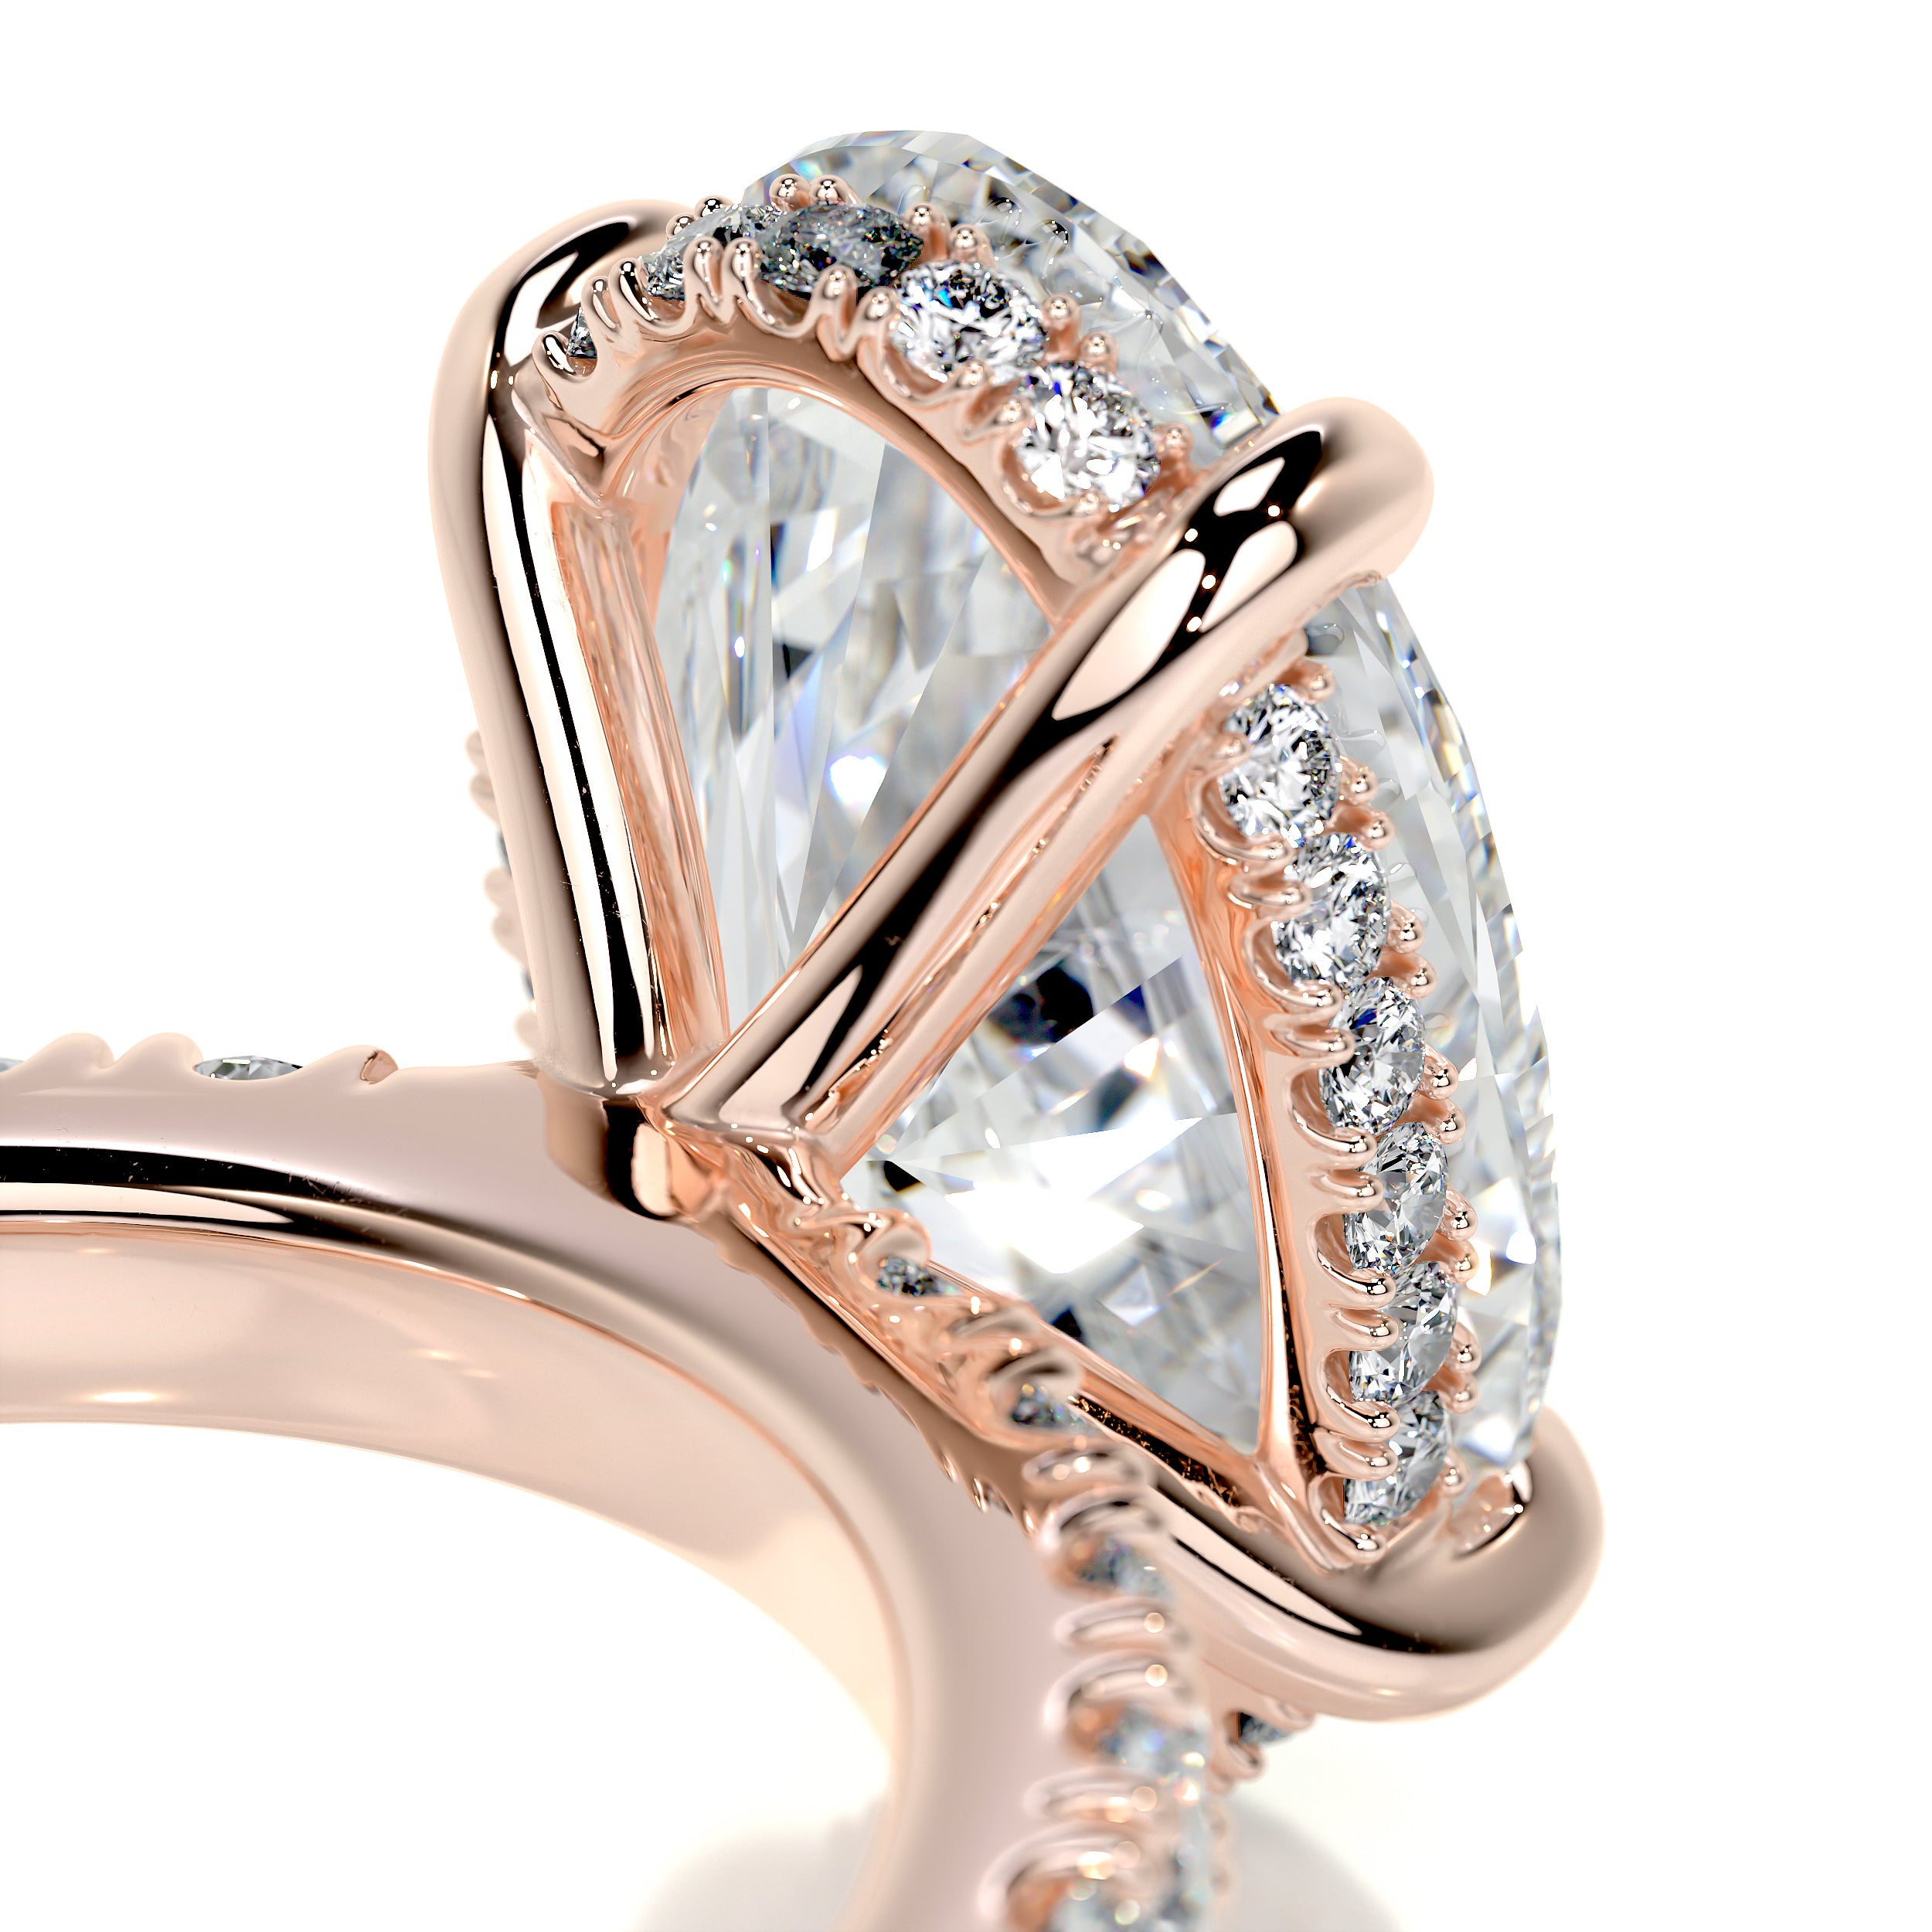 Lucy Diamond Engagement Ring   (3.5 Carat) -14K Rose Gold